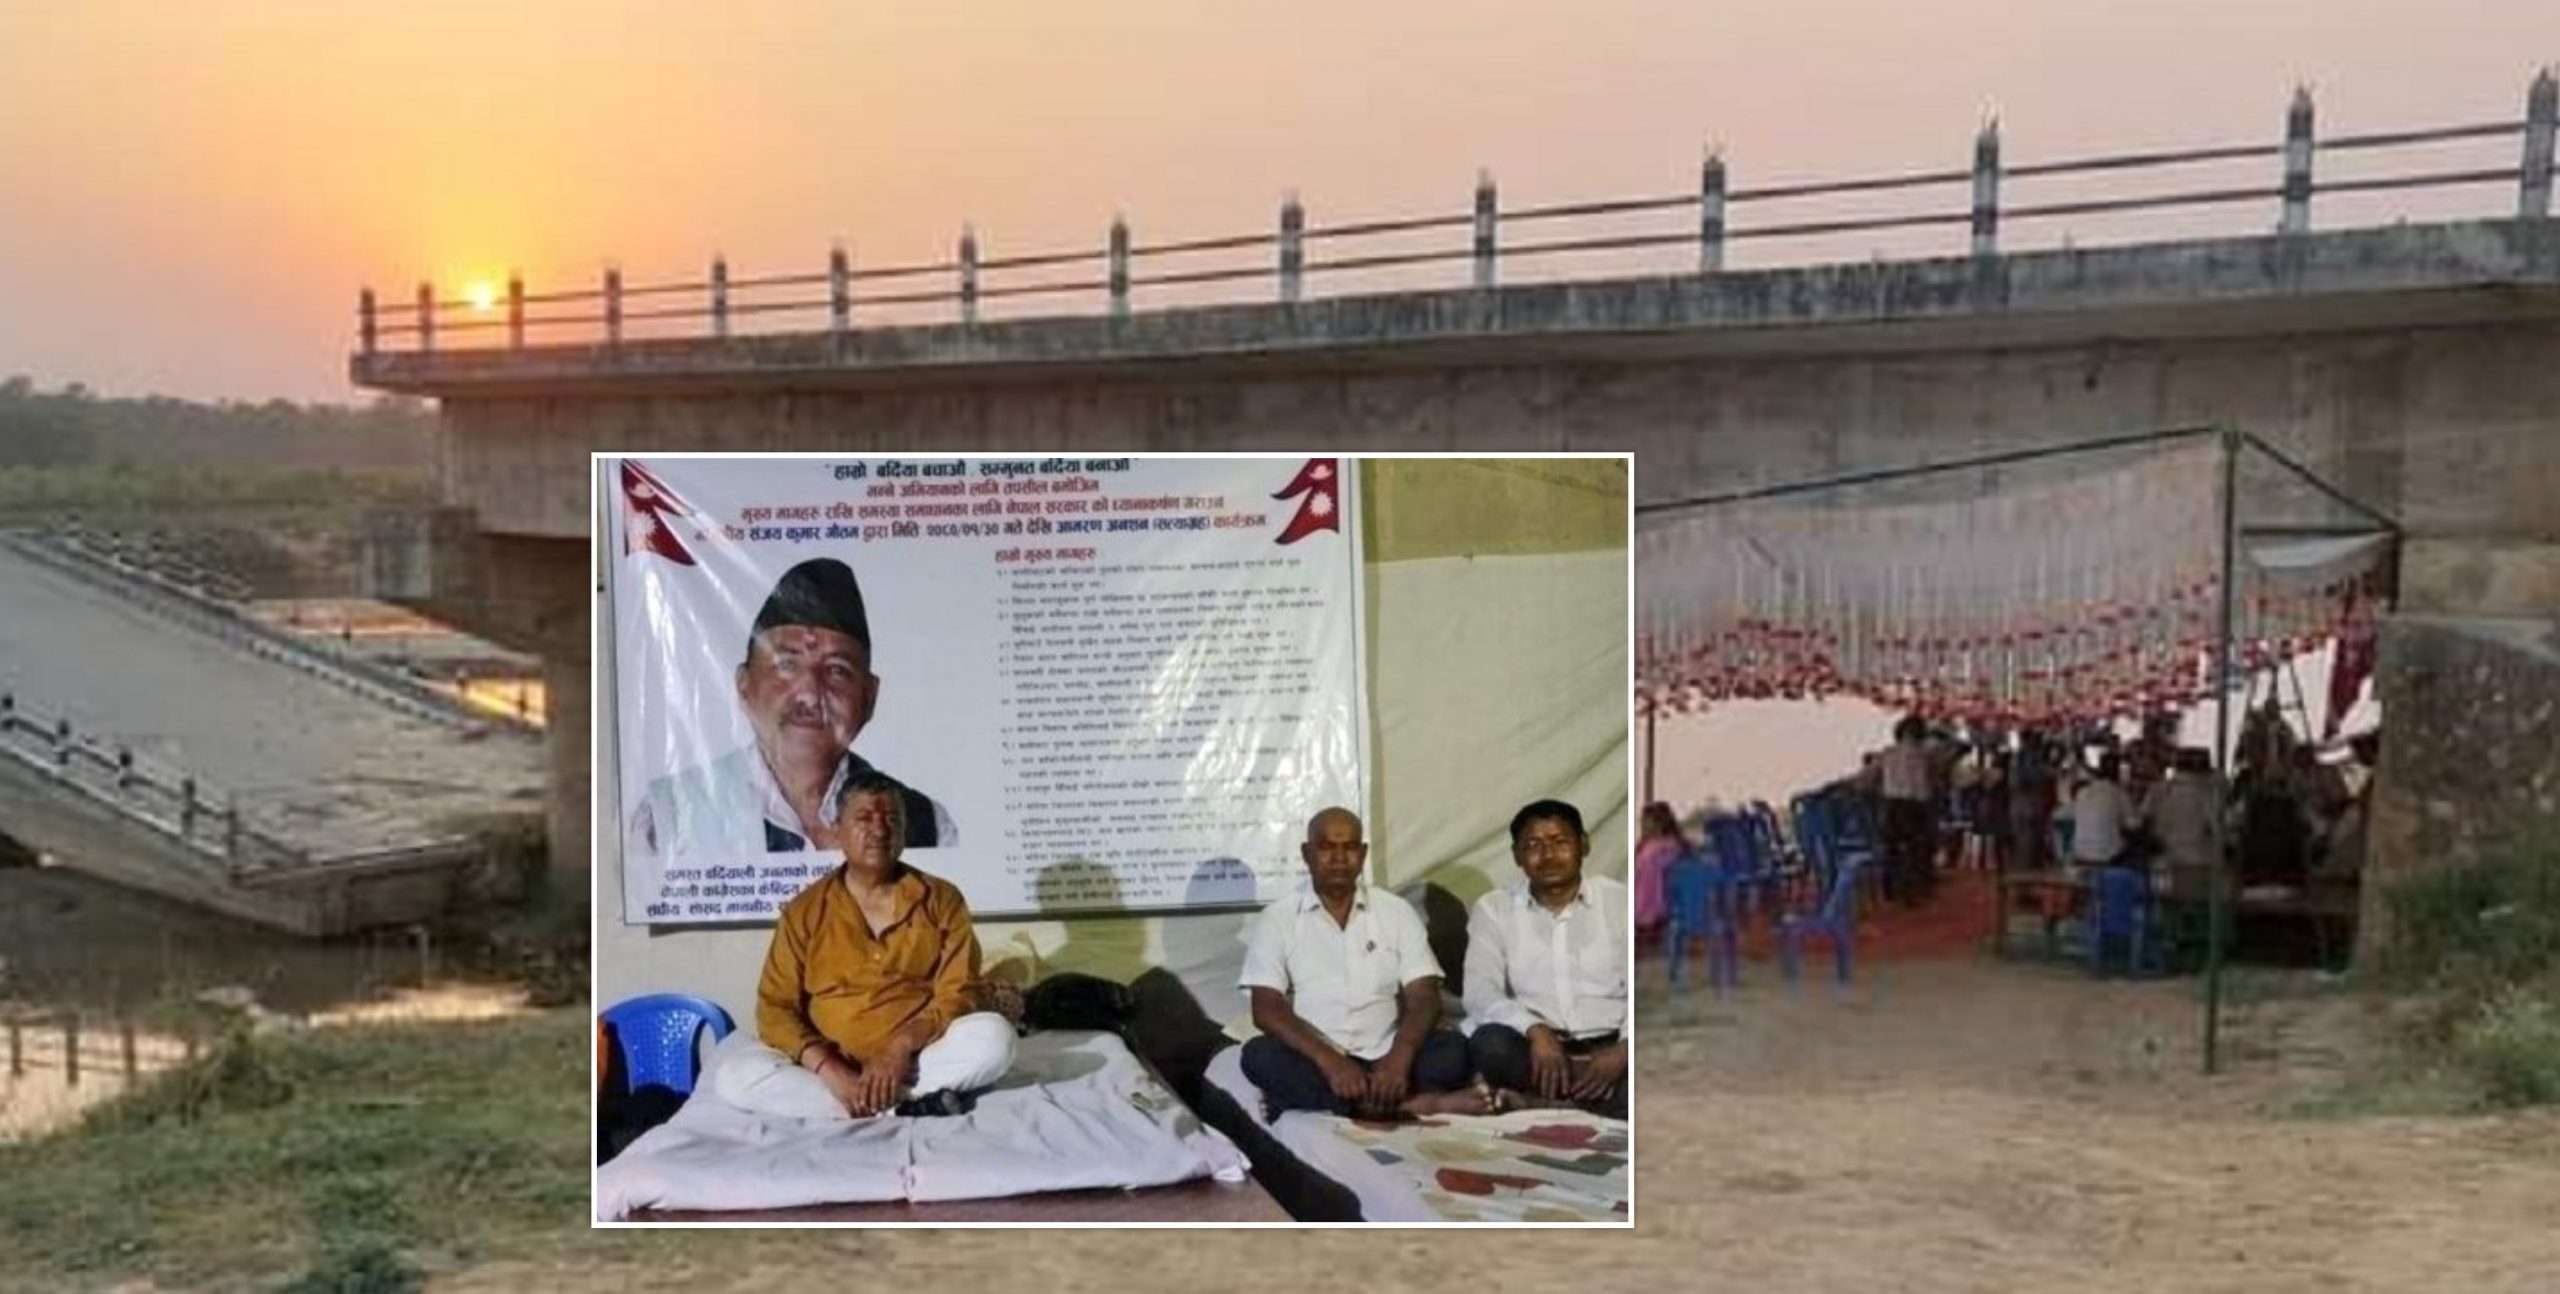 MP Sanjay Gautam on hunger strike under the collapsed bridge demanding construction